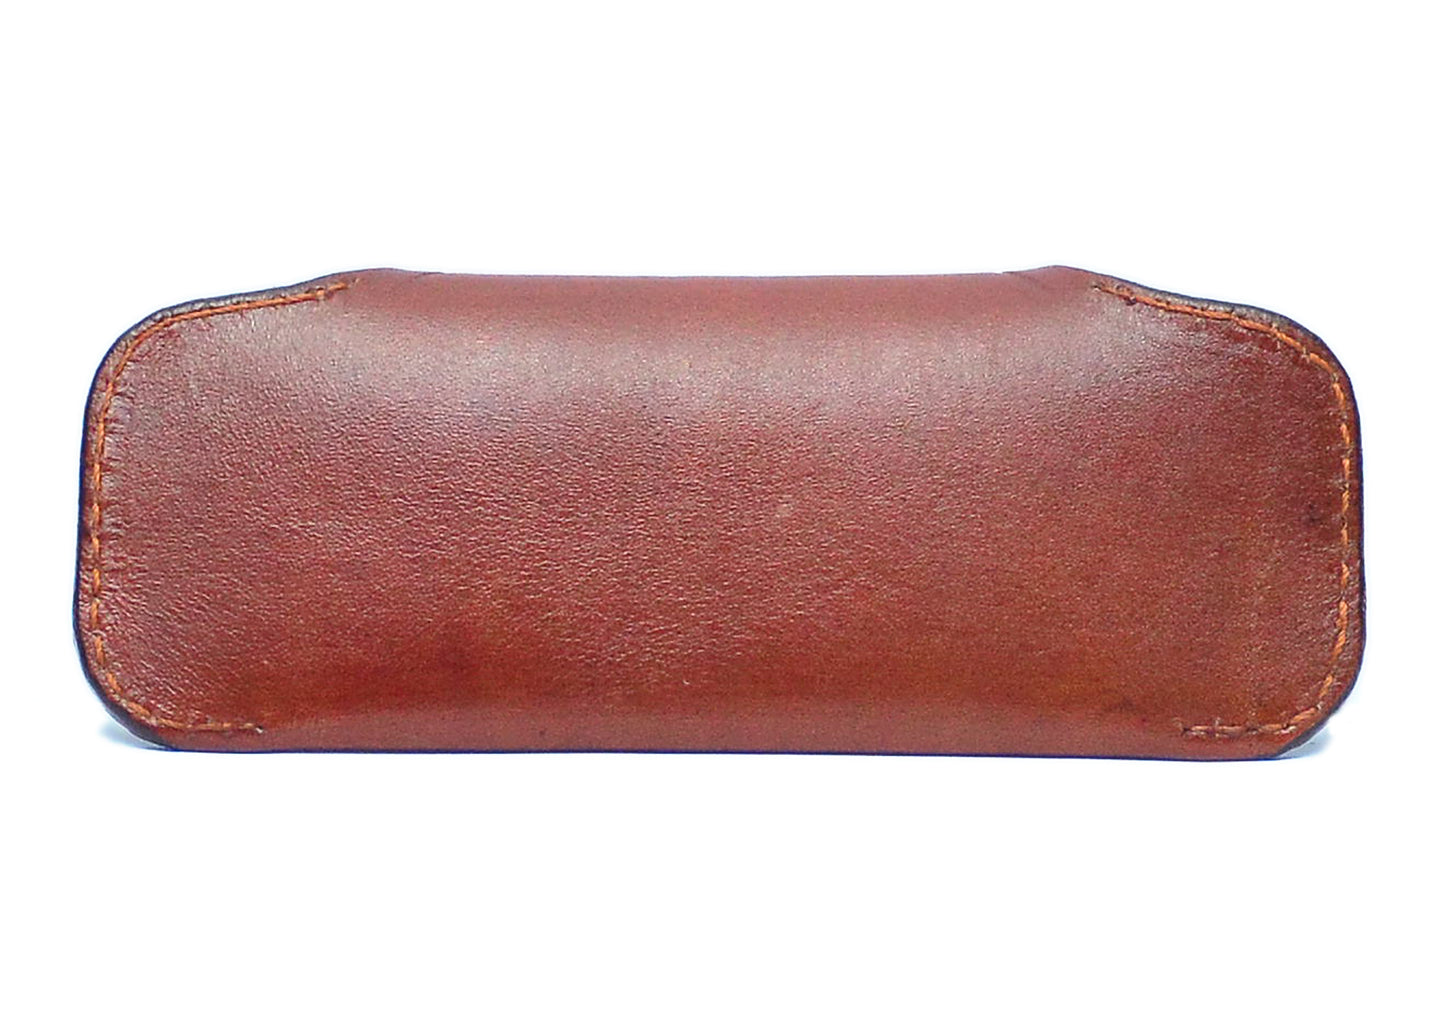 SleekStyle Leather Wallet